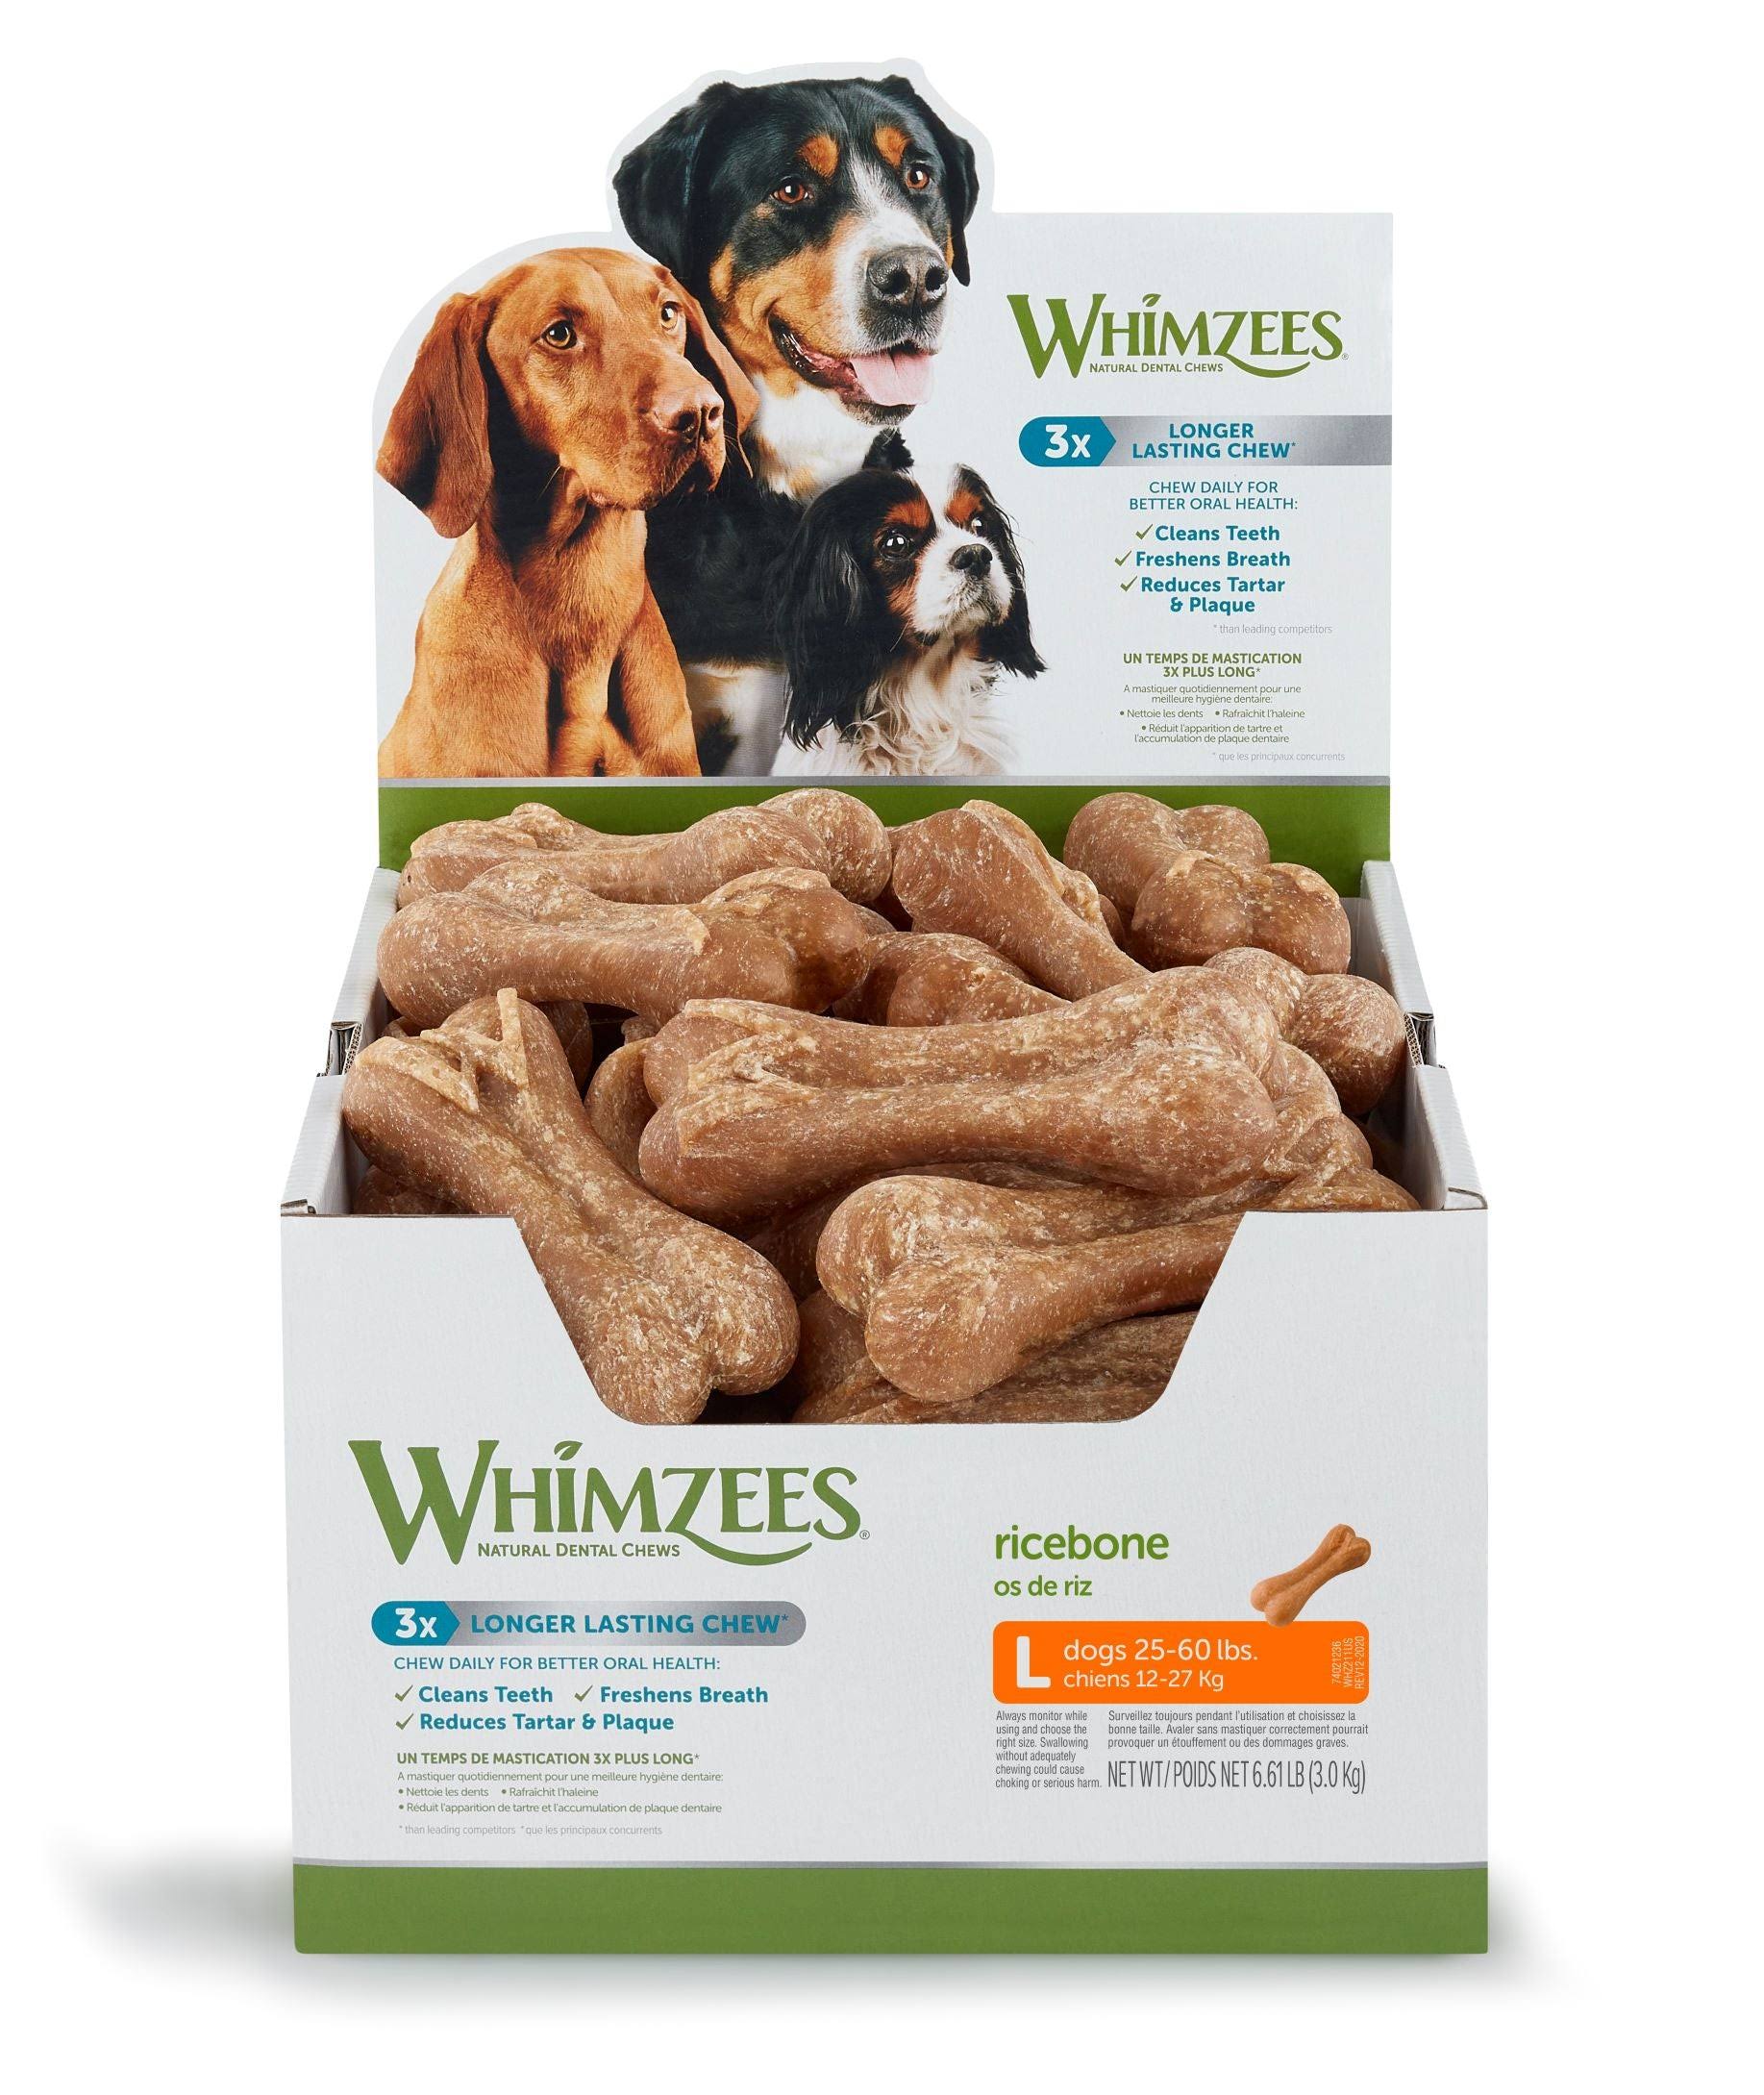 Whimzees Rice Bone Dog Treats